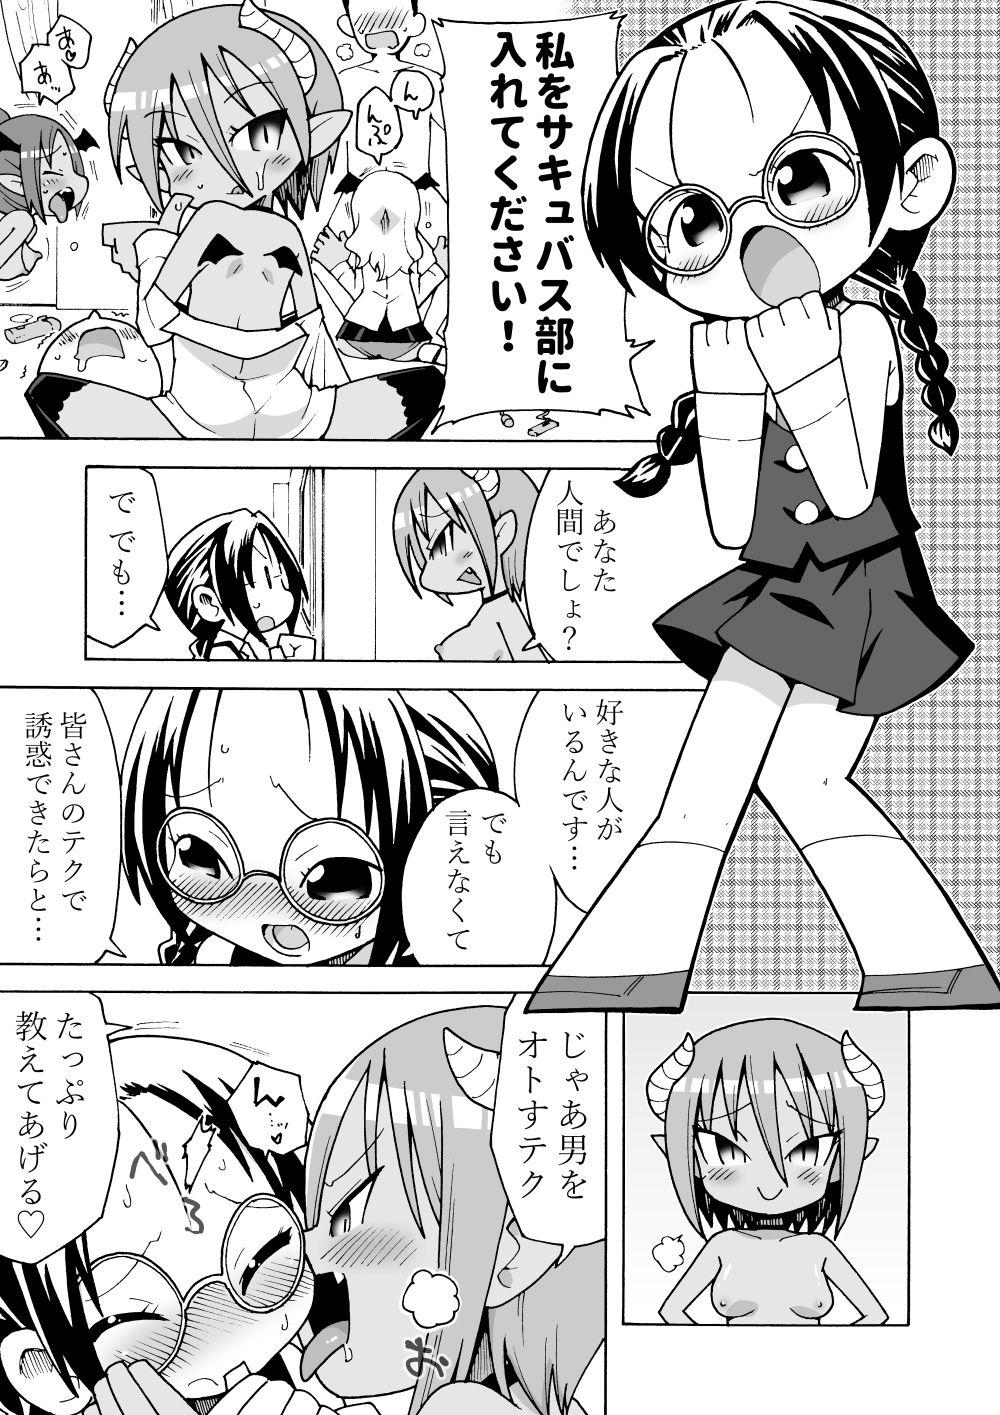 Asses Succubus Manga Cheating - Picture 1